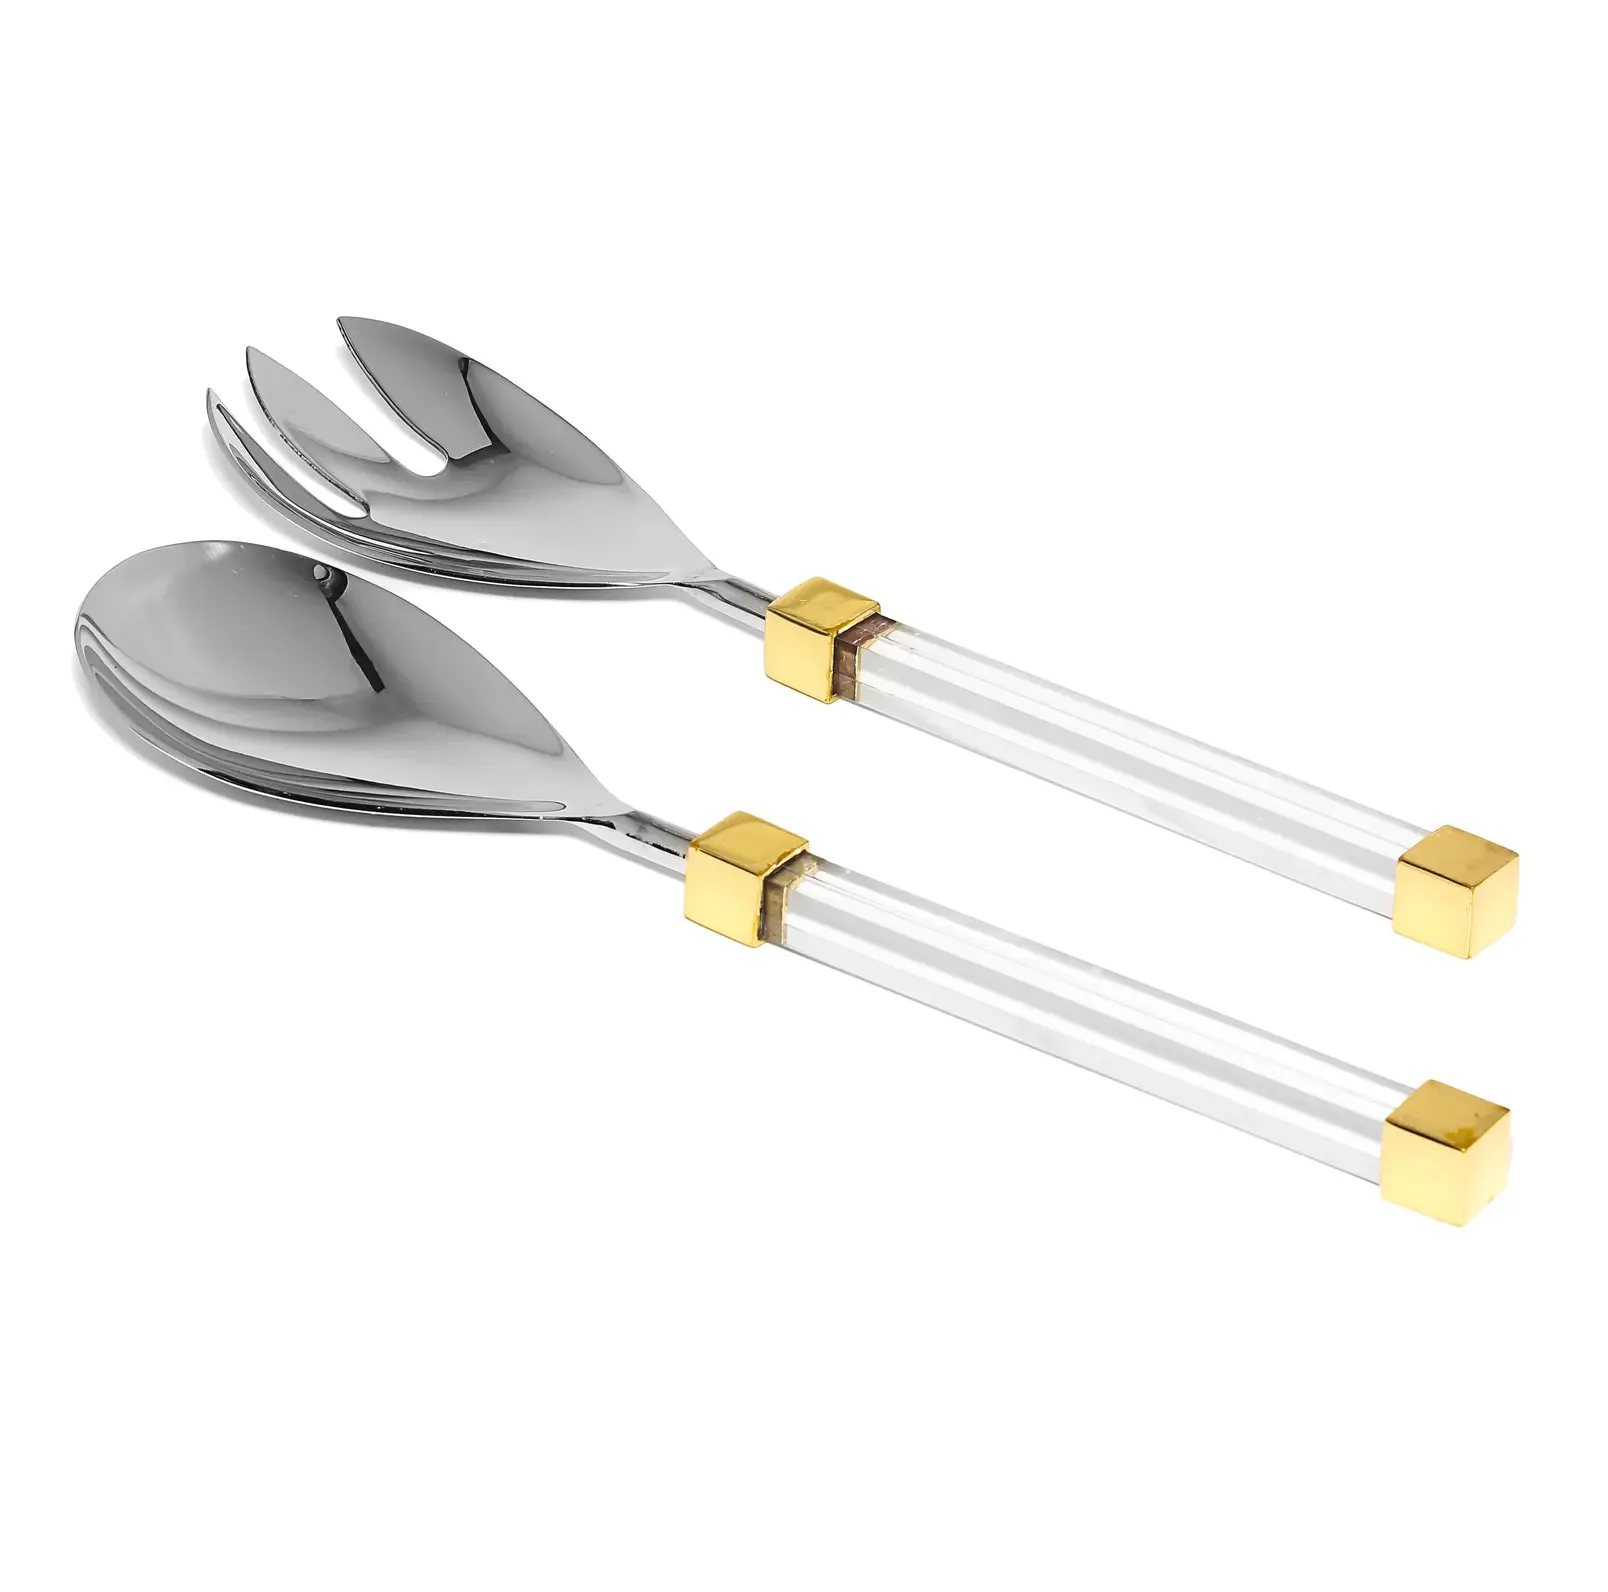 Sendok garpu gagang akrilik sendok baja tahan karat dan kerajinan tangan desain kuningan harga terbaik